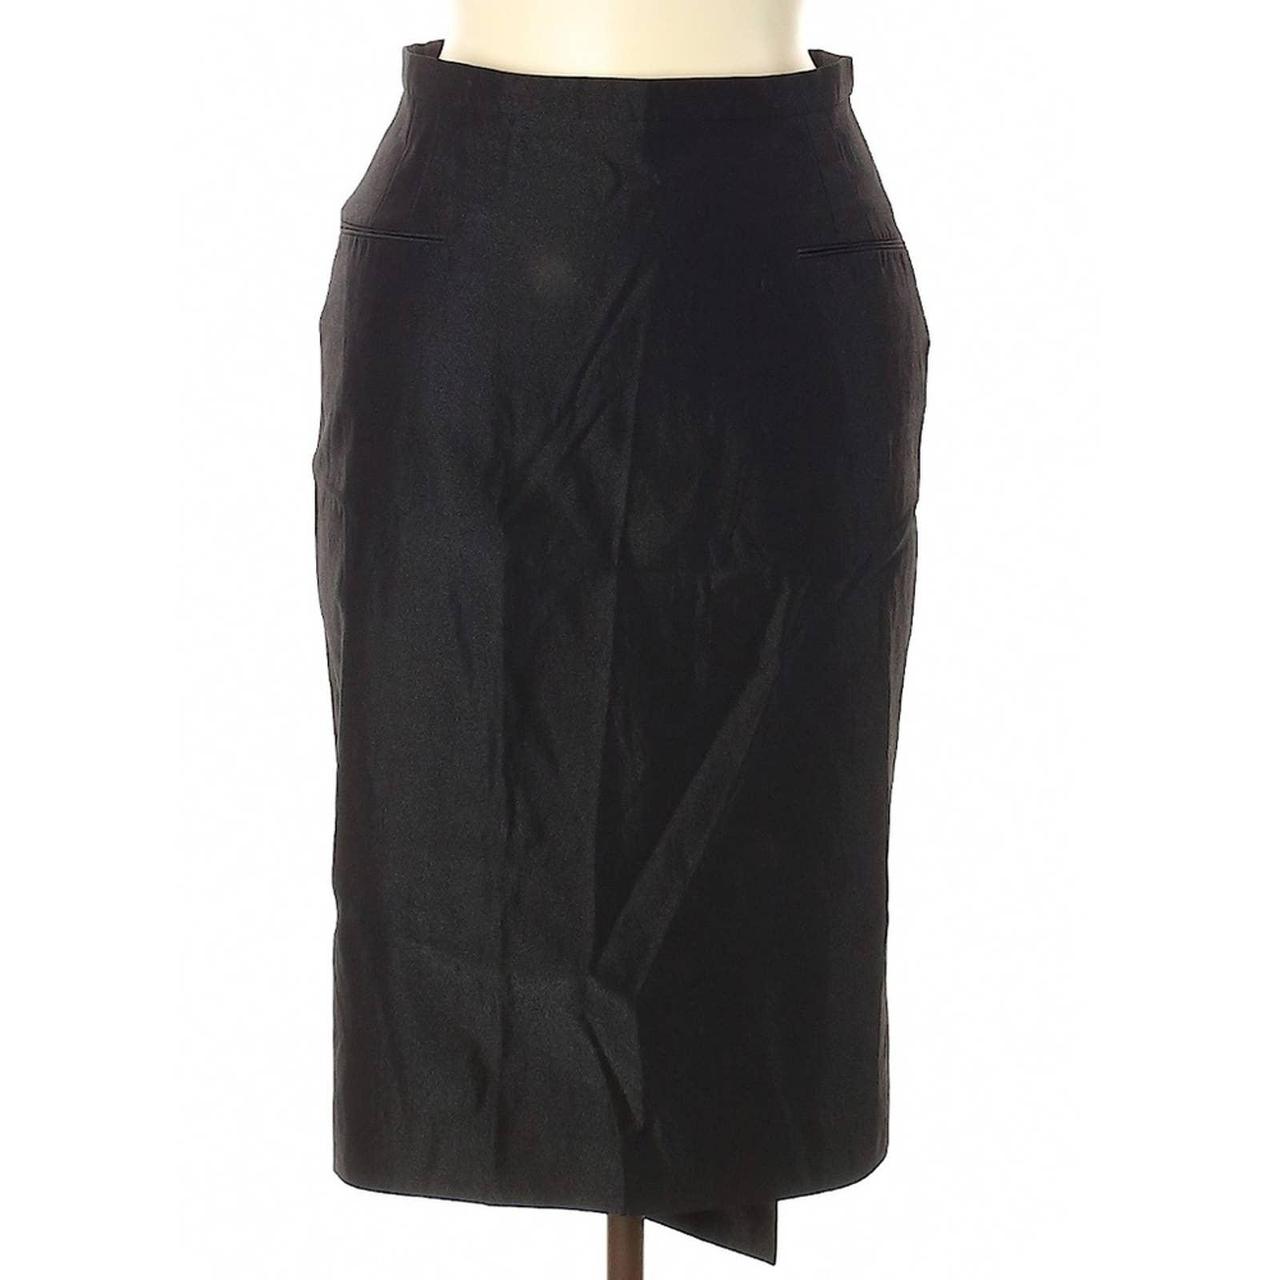 Narciso Rodriguez Women's Black Skirt